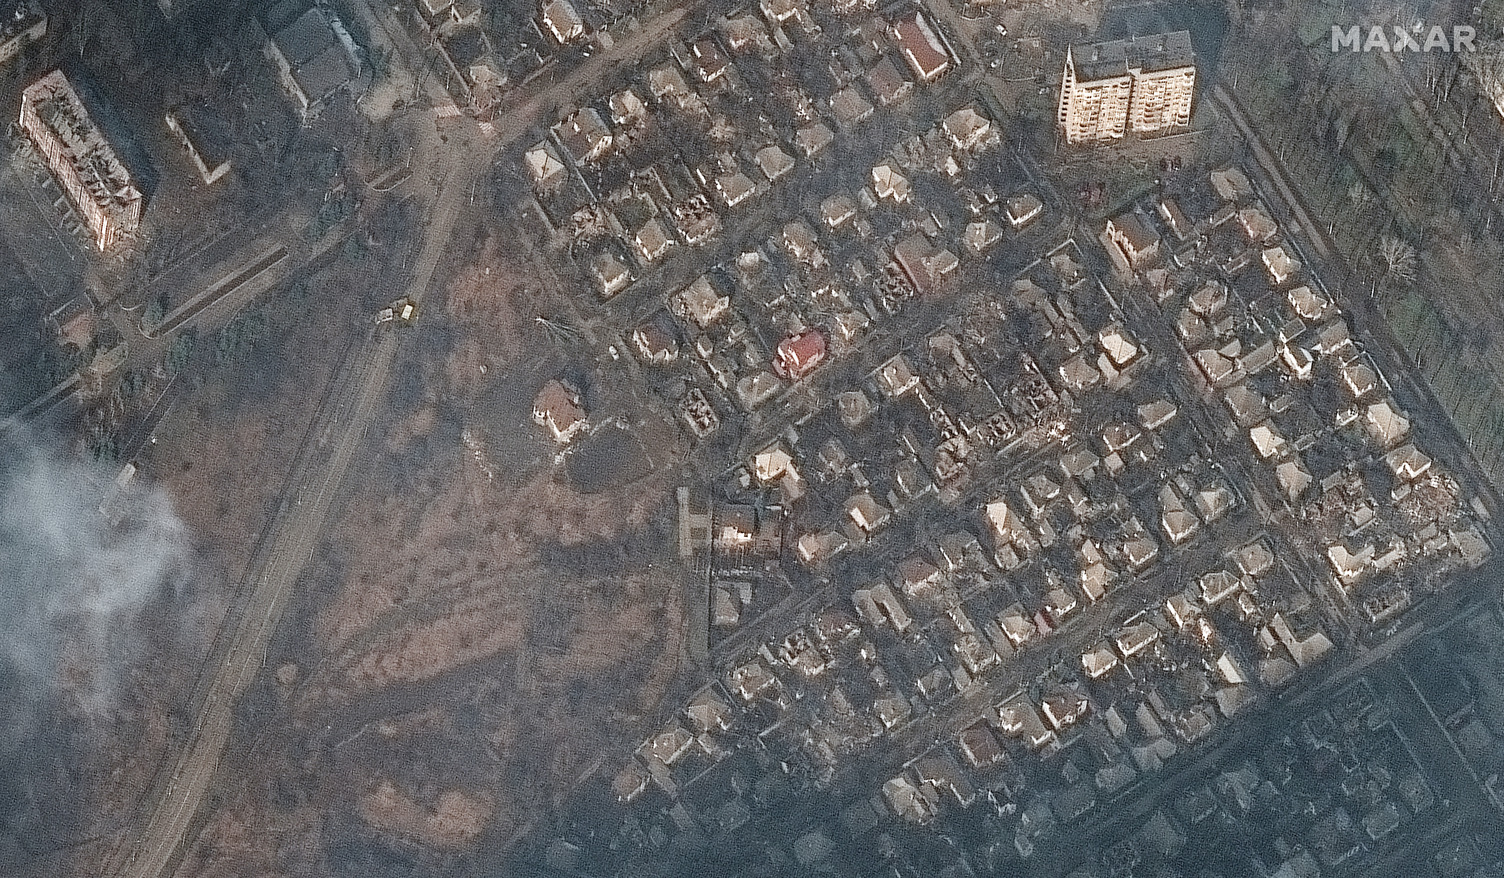 08_destroyed homes and buildings_eastern mariupol_ukraine_9march2022_wv3.jpg